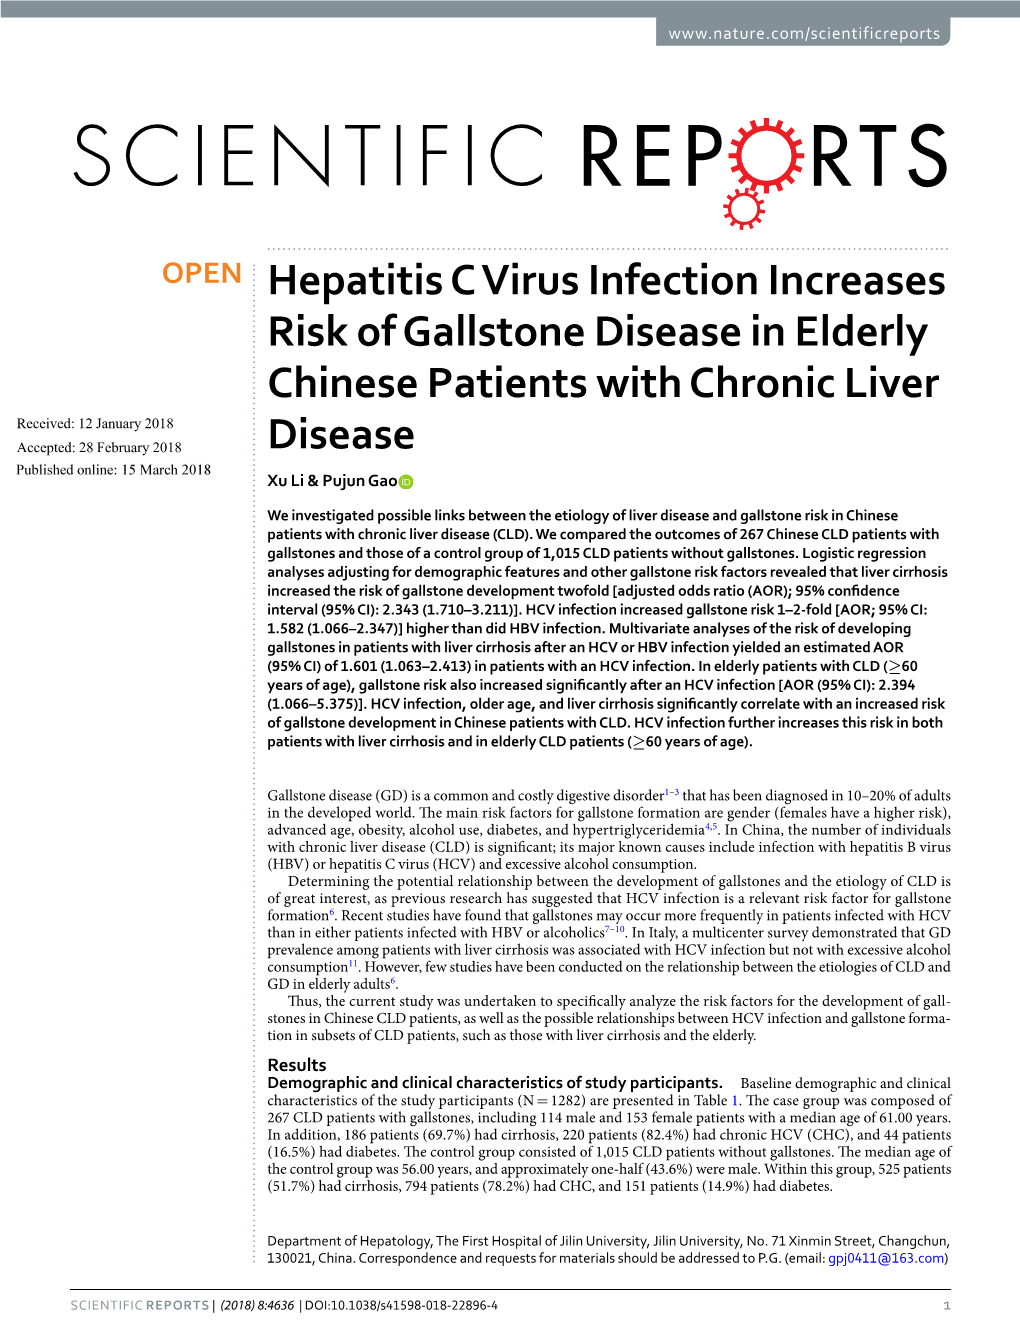 Hepatitis C Virus Infection Increases Risk of Gallstone Disease in Elderly